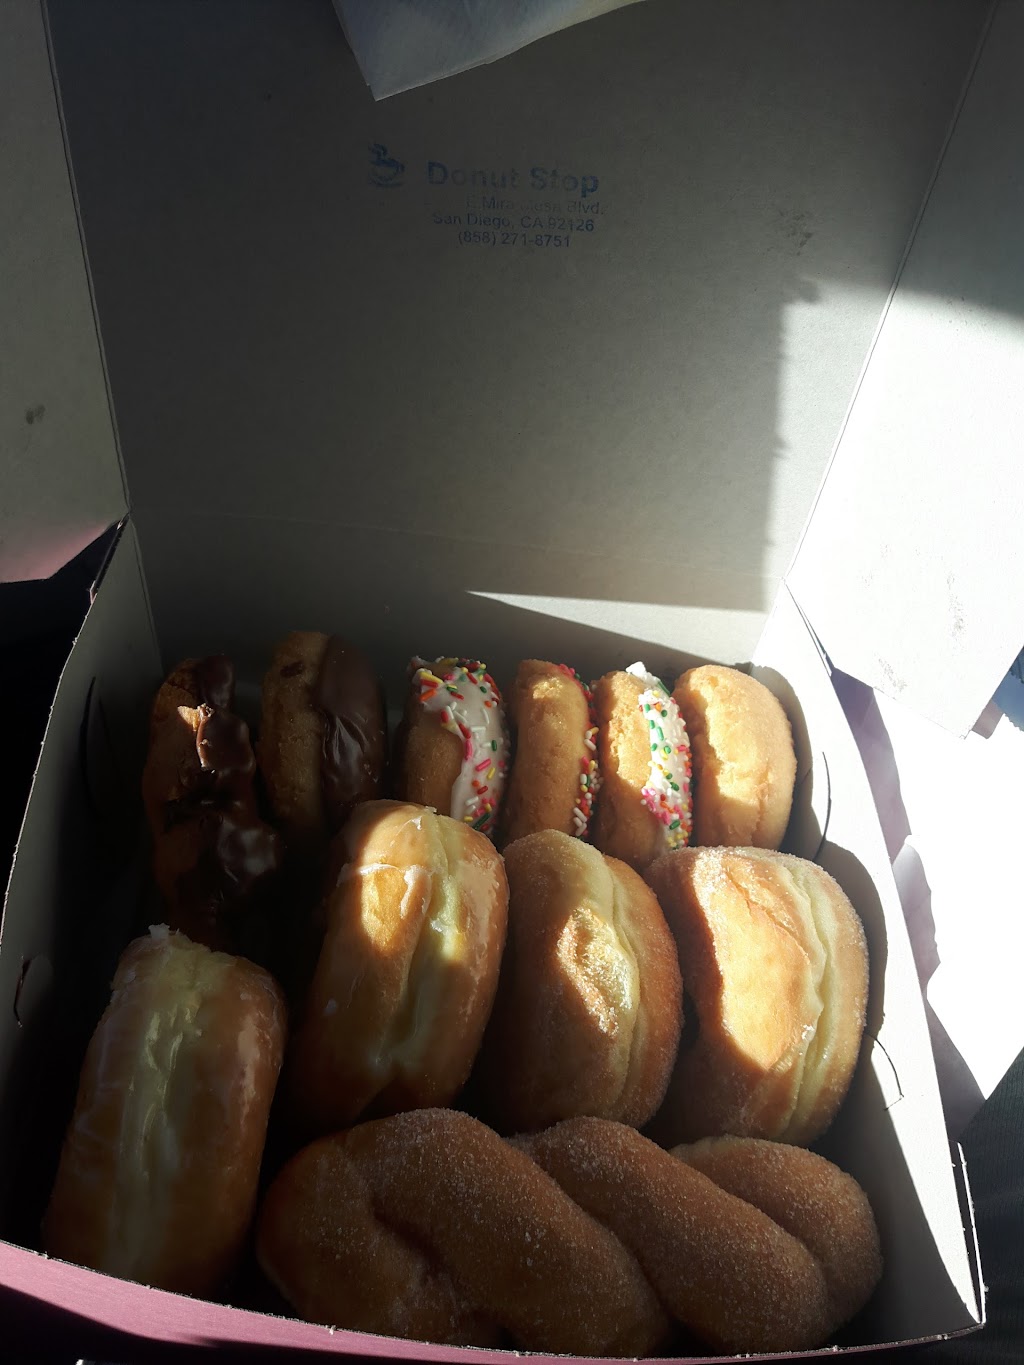 Donut Stop | 9330 Mira Mesa Blvd # E, San Diego, CA 92126 | Phone: (858) 271-8751